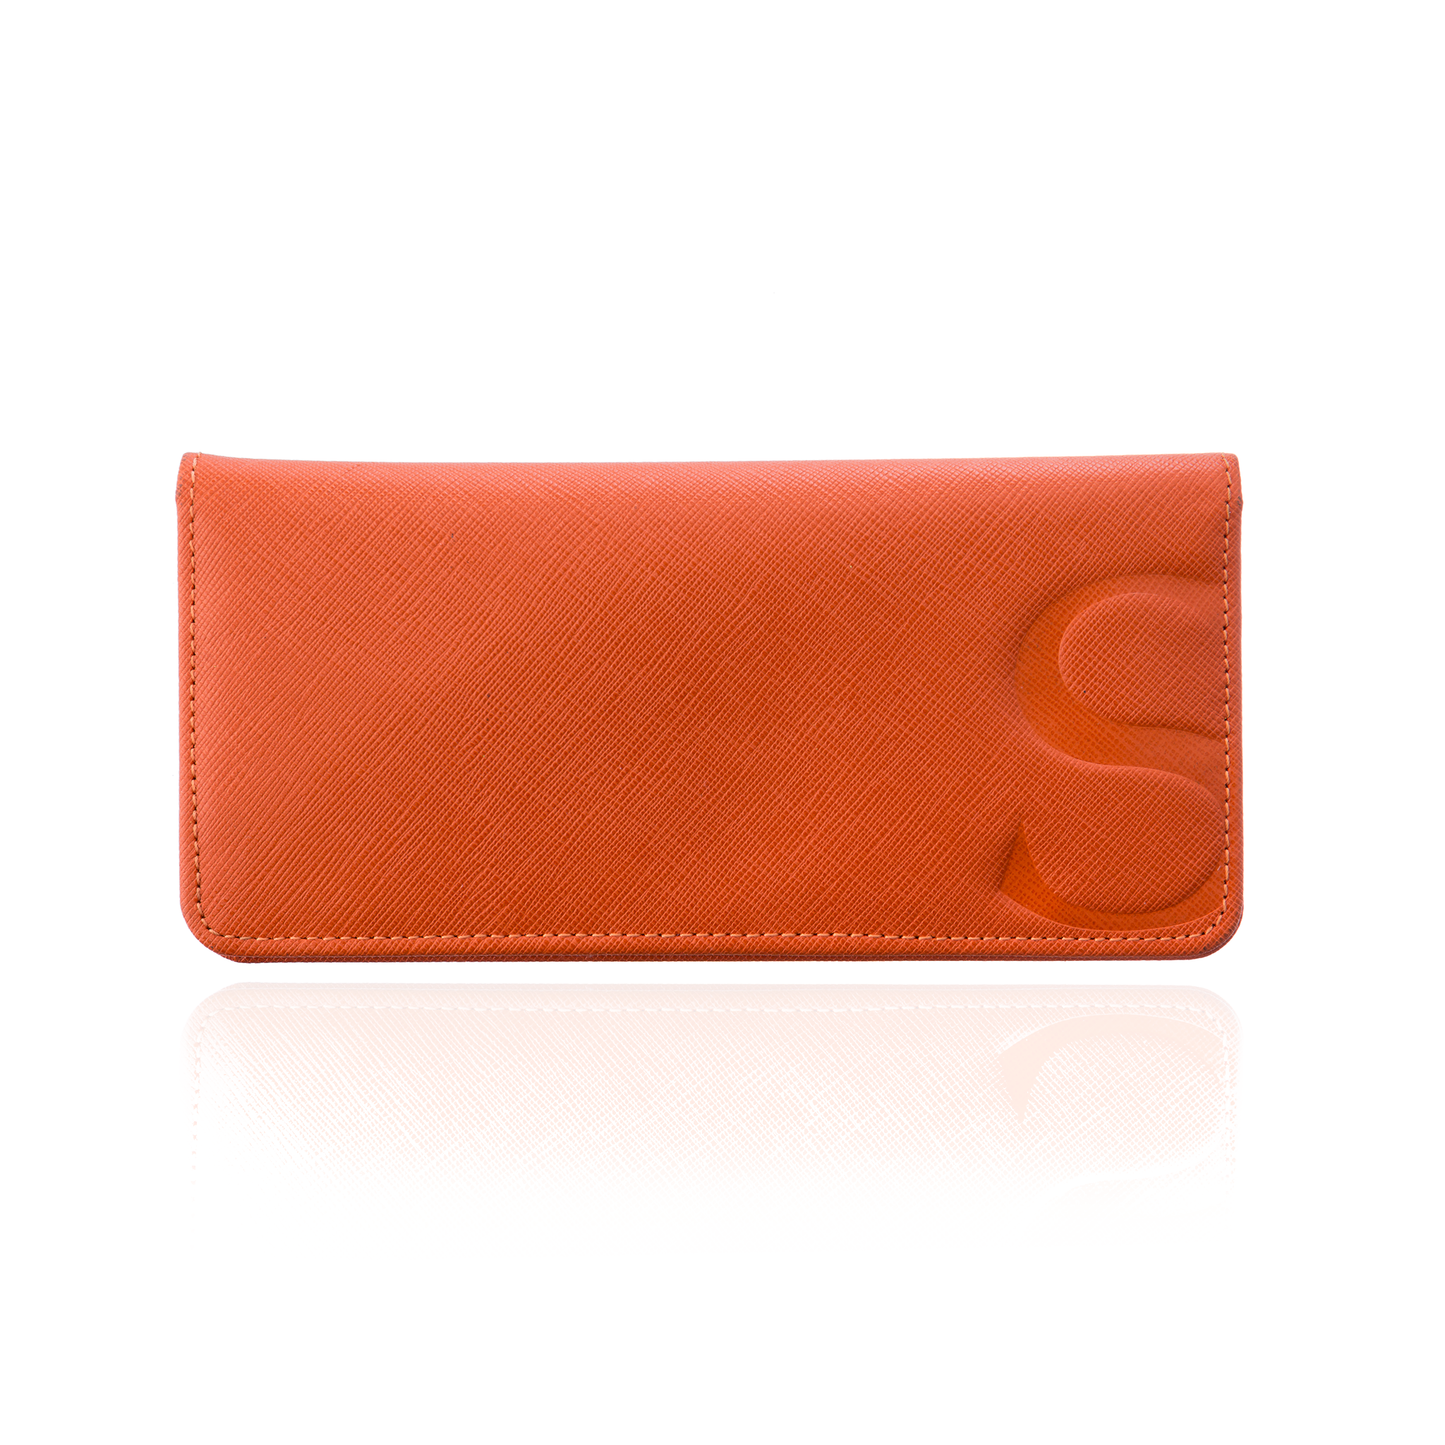 Slim Wallet in Orange Textured Leather